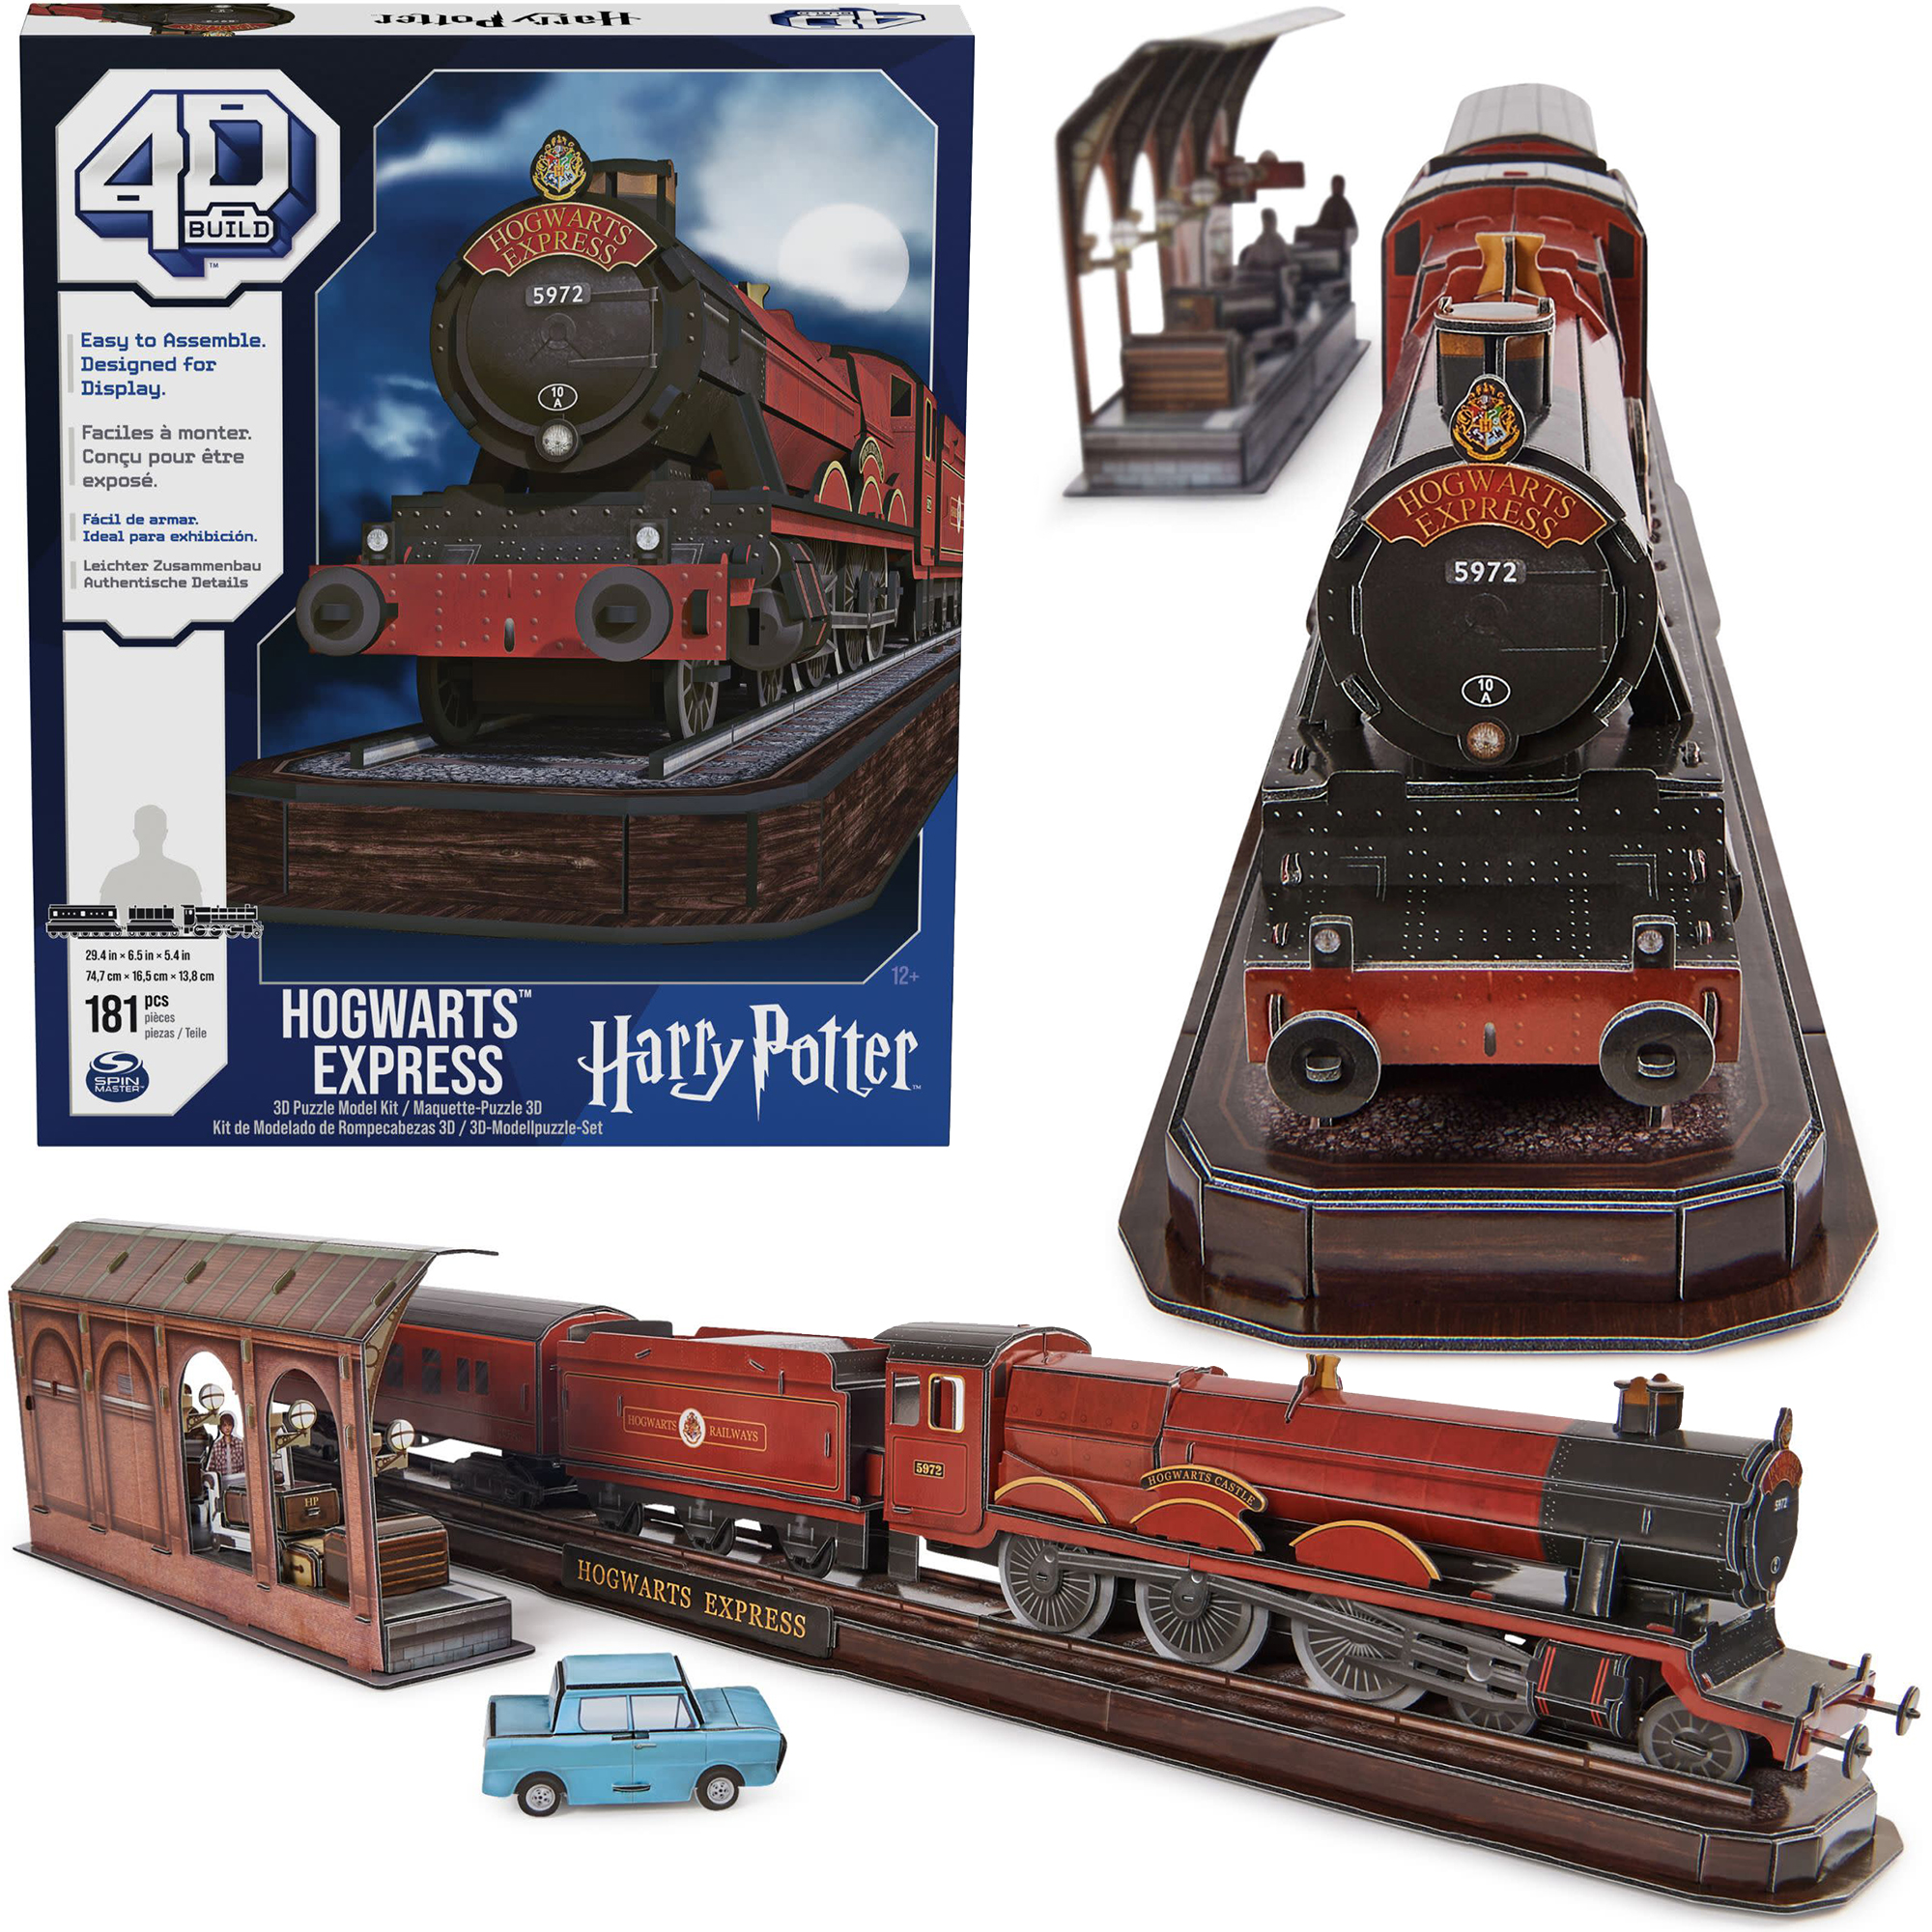 Puzzle 4D Build Harry Potter pocig Hogwarts Express model 3D do zoenia